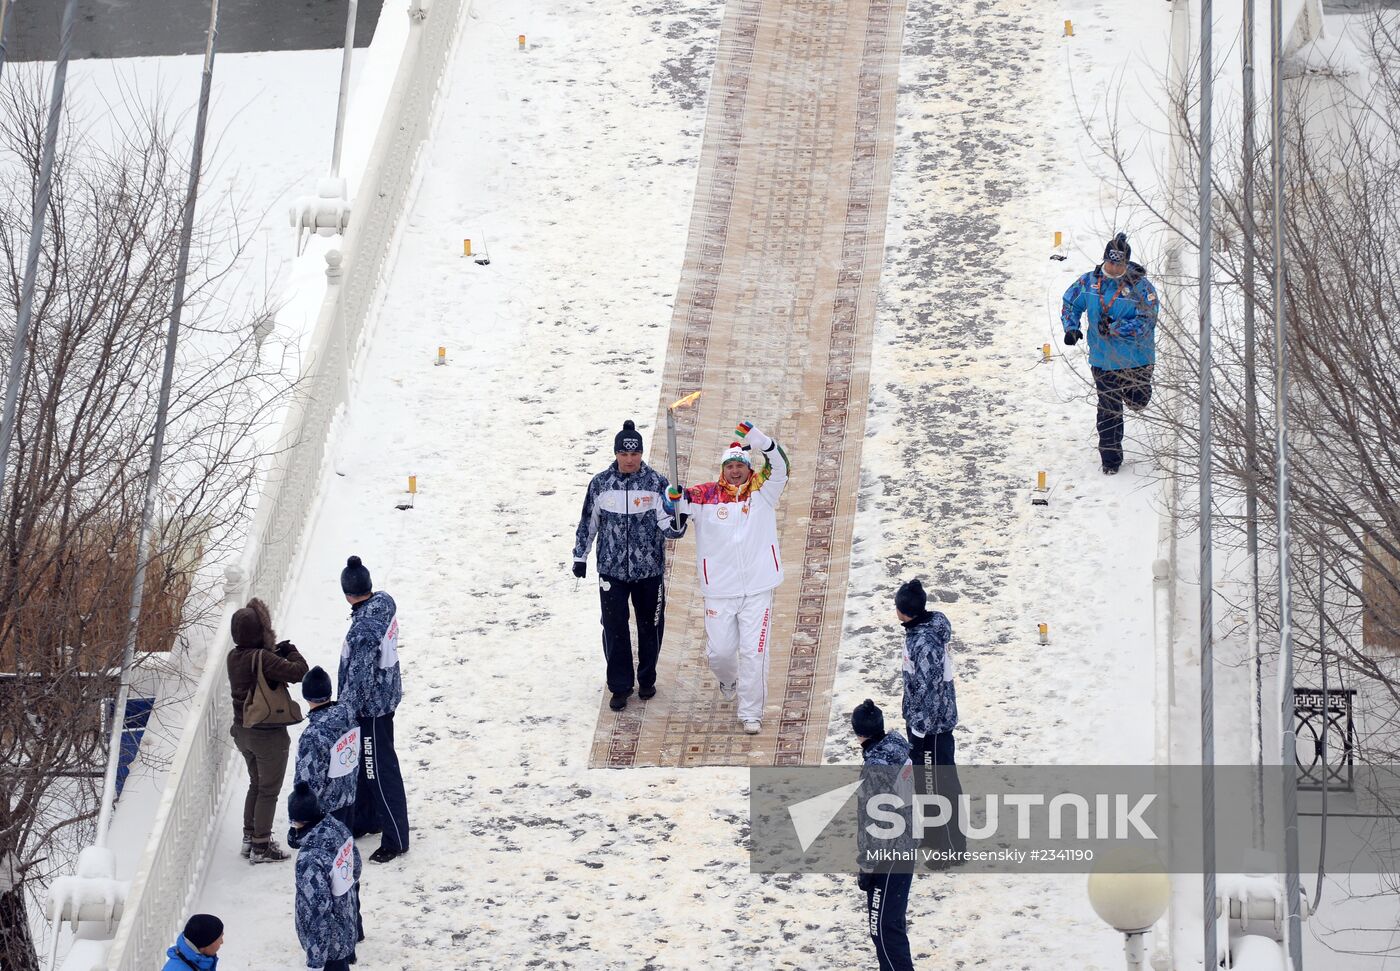 Sochi 2014 Olympic torch relay. Orenburg